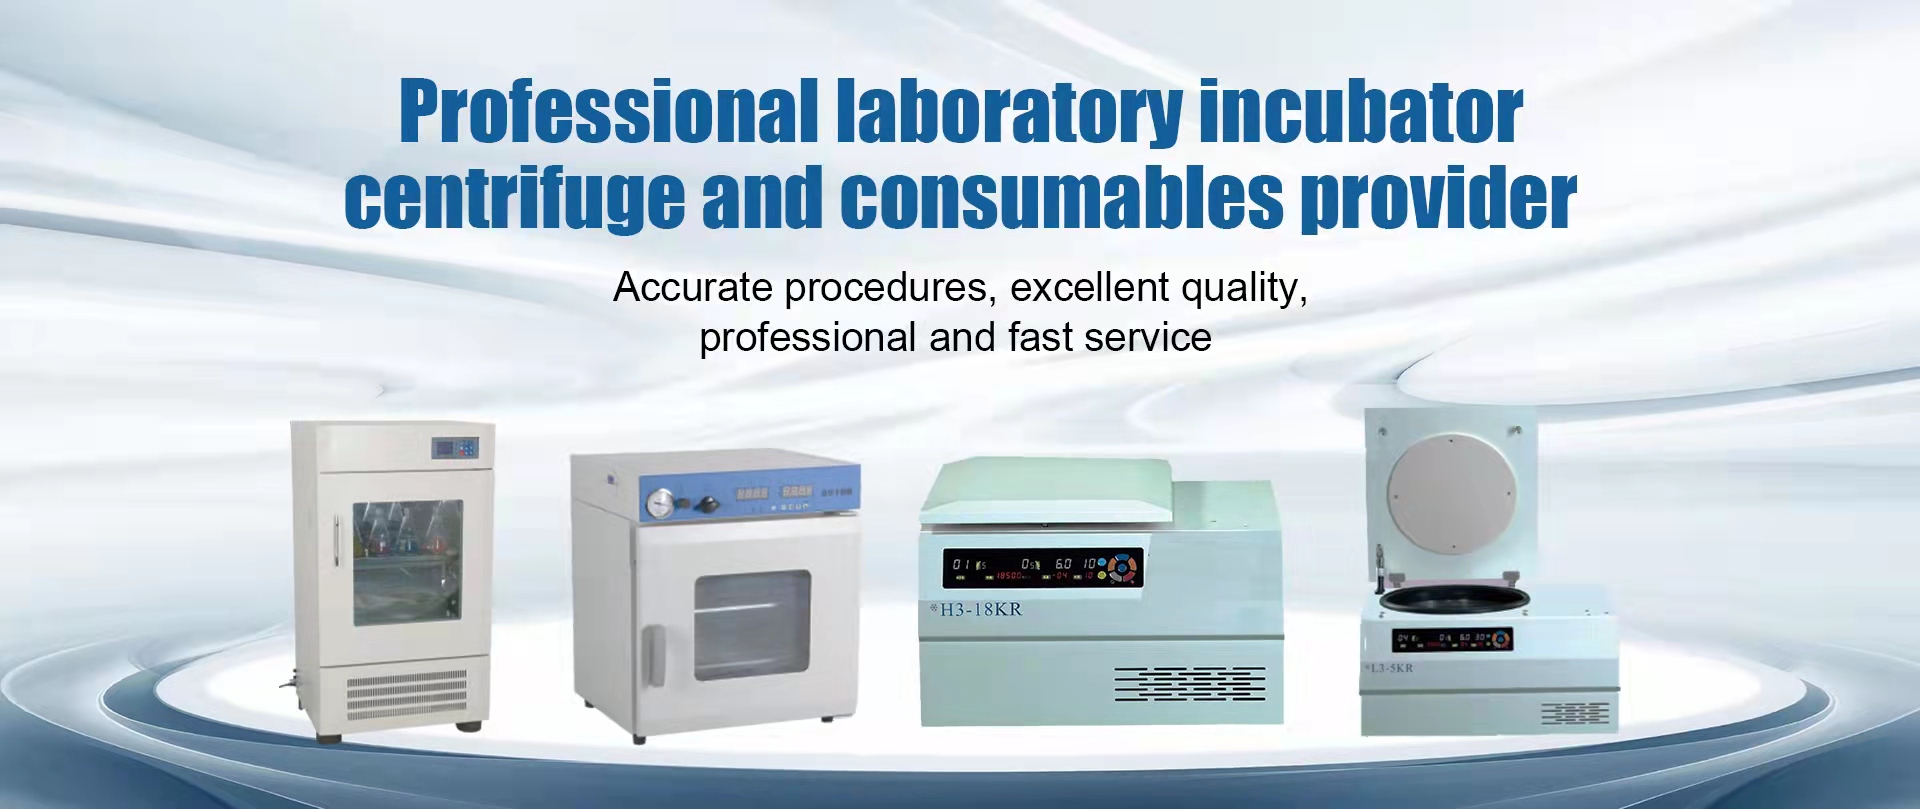 Profesjonele laboratoarium incubator, centrifuge en verbruiksartikelen provider